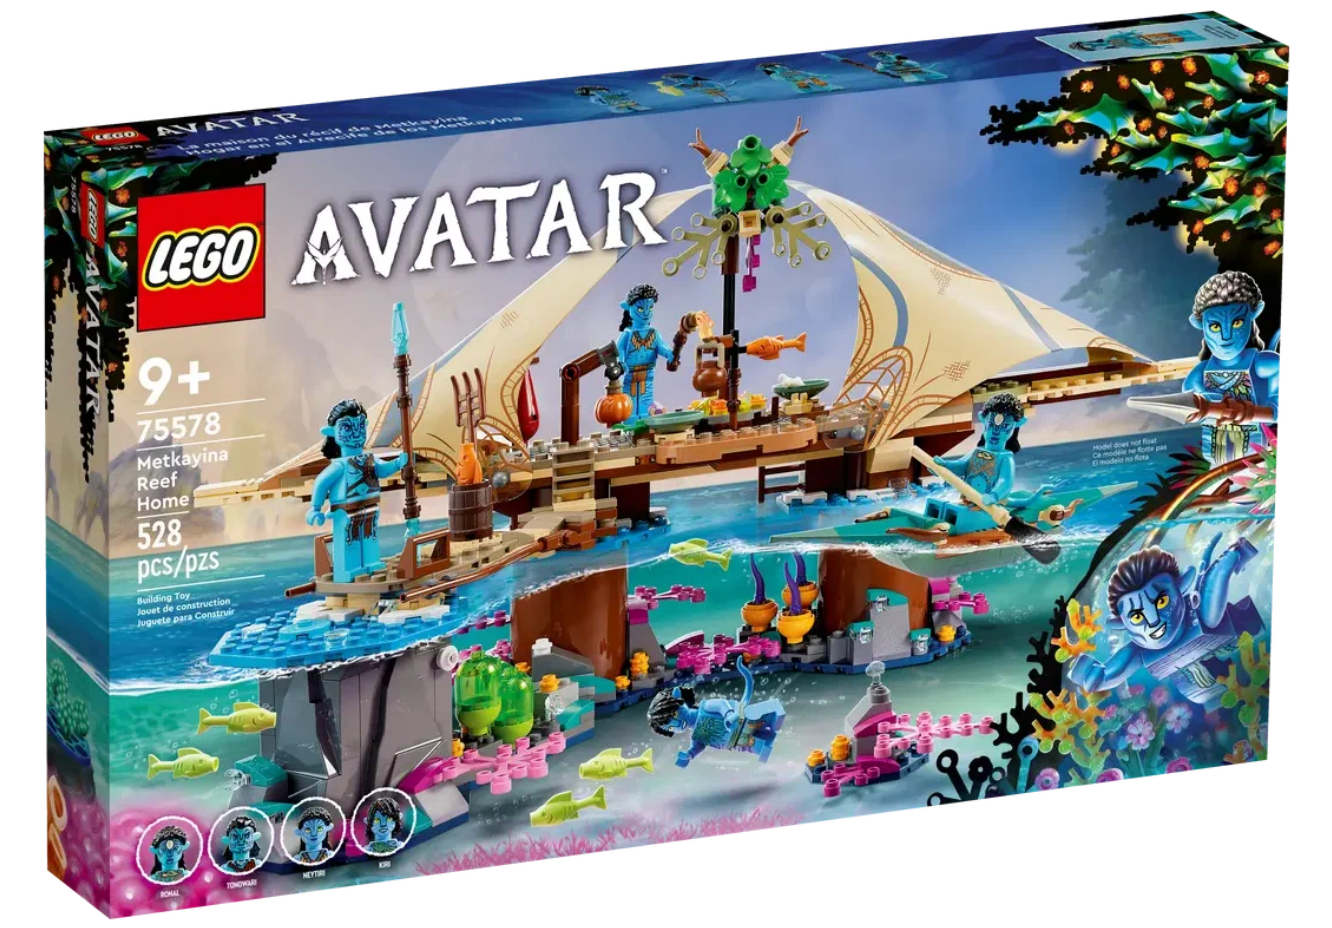 Конструктор LEGO Avatar 75578 Metkayina Reef Home, 528 дет.